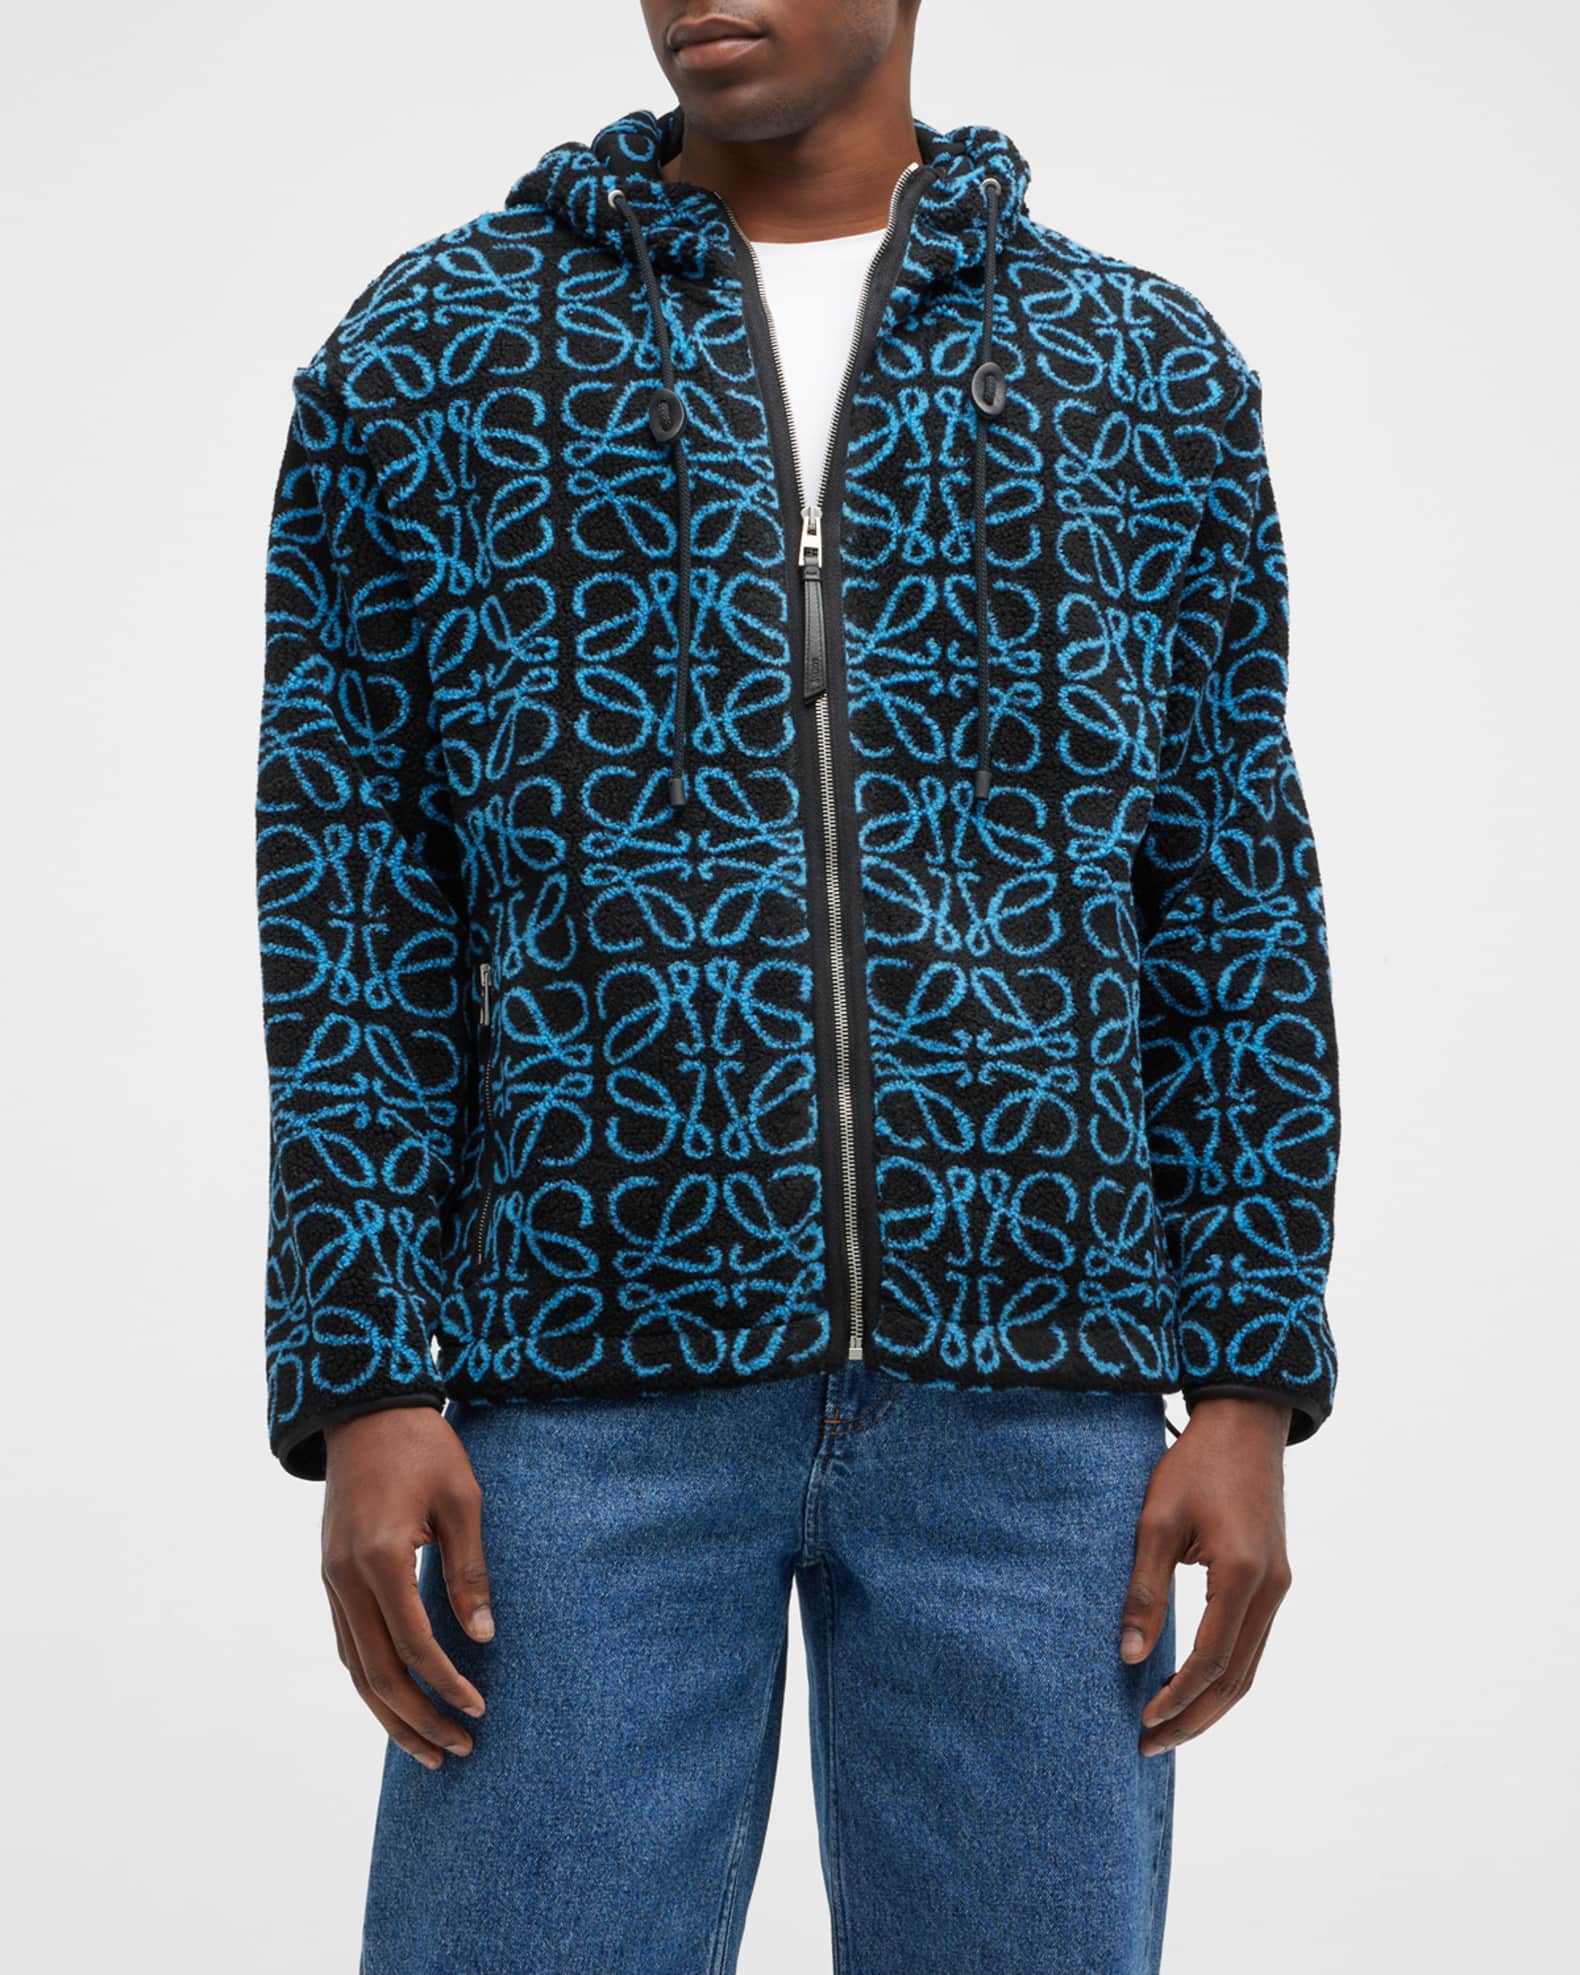 Luxury Anagram jacquard fleece jacket for Men LOEWE Men Clothing Jackets Fleece Jackets 